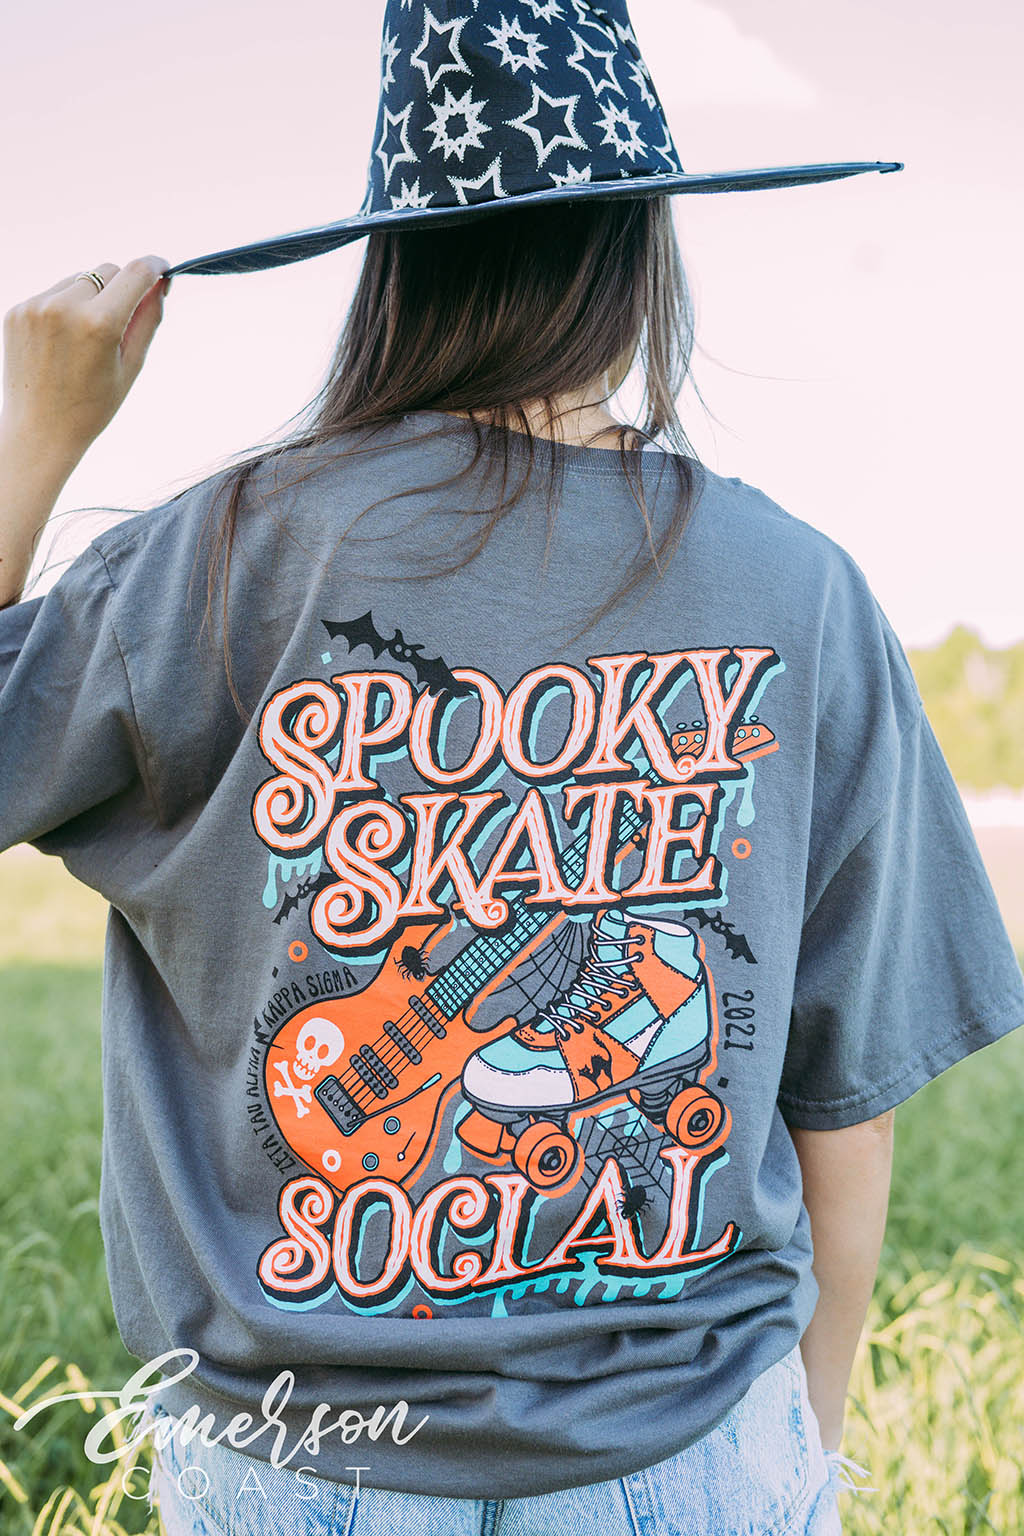 Zeta Tau Alpha Spooky Skate Social Tee